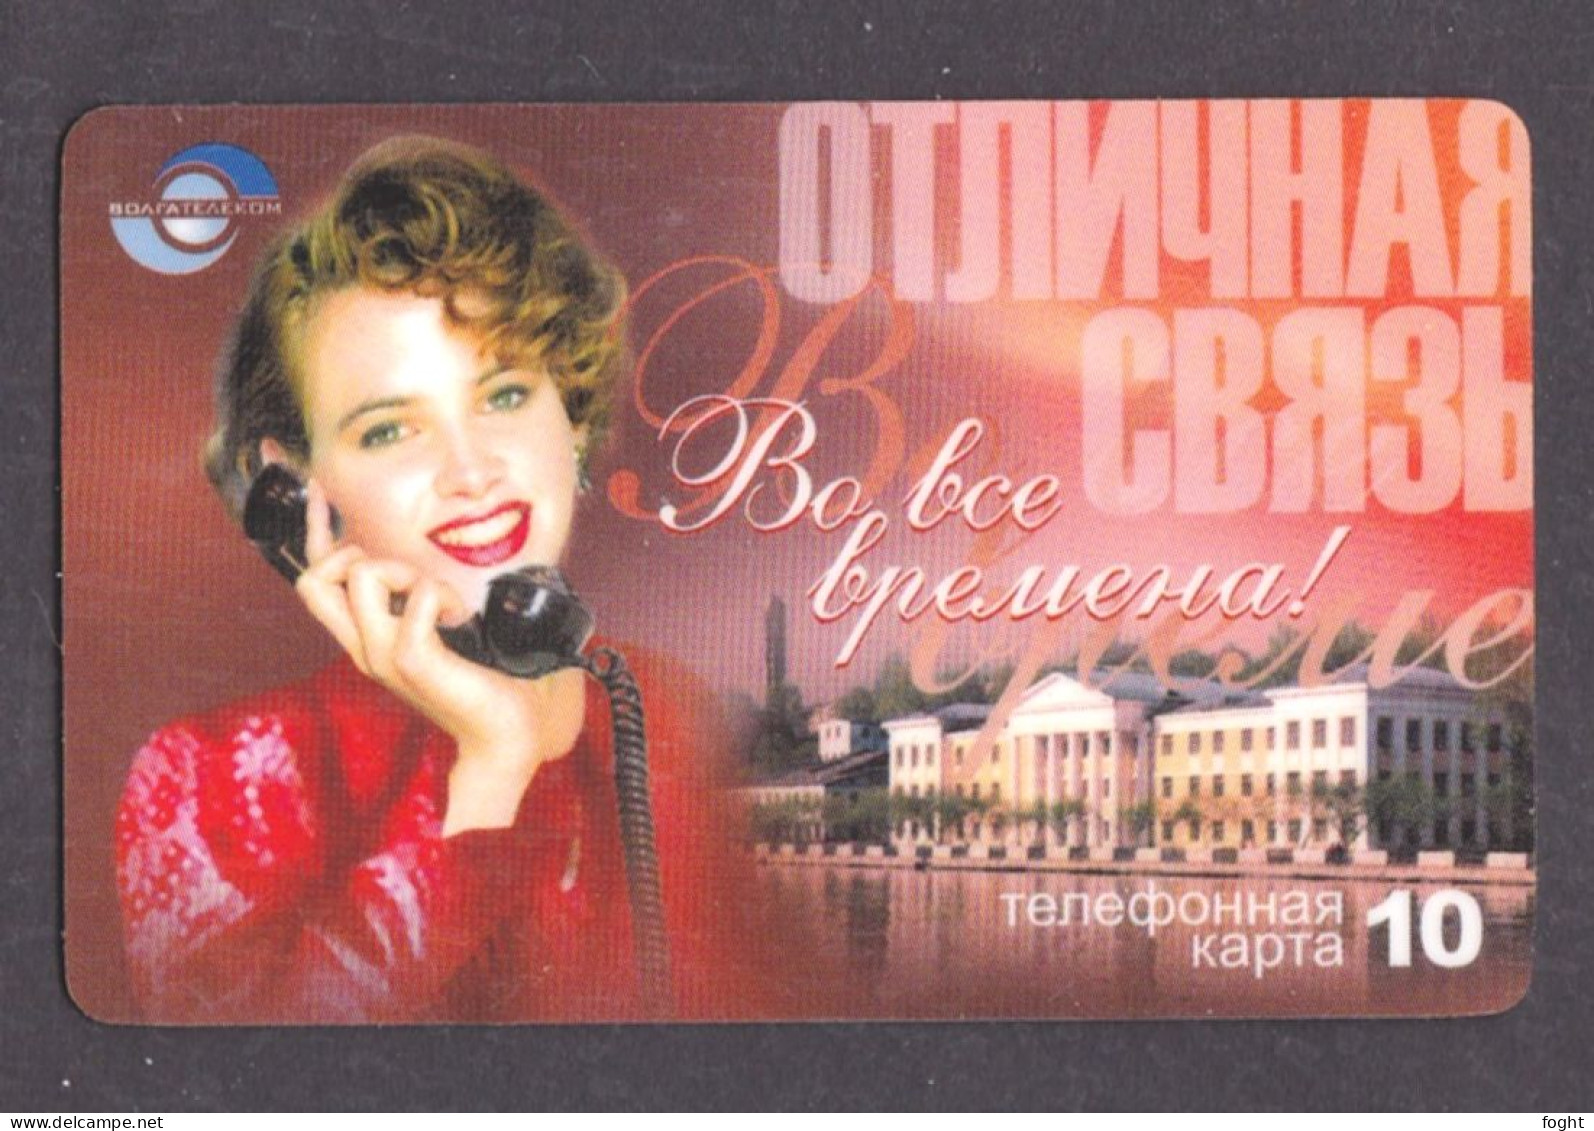 2003 ЕЮ Remote Memory Russia ,Volga Telecom-Izhevsk,Good Connection All The Time!,10 Units Card,Col:RU-PRE-UDM-0272 - Rusia